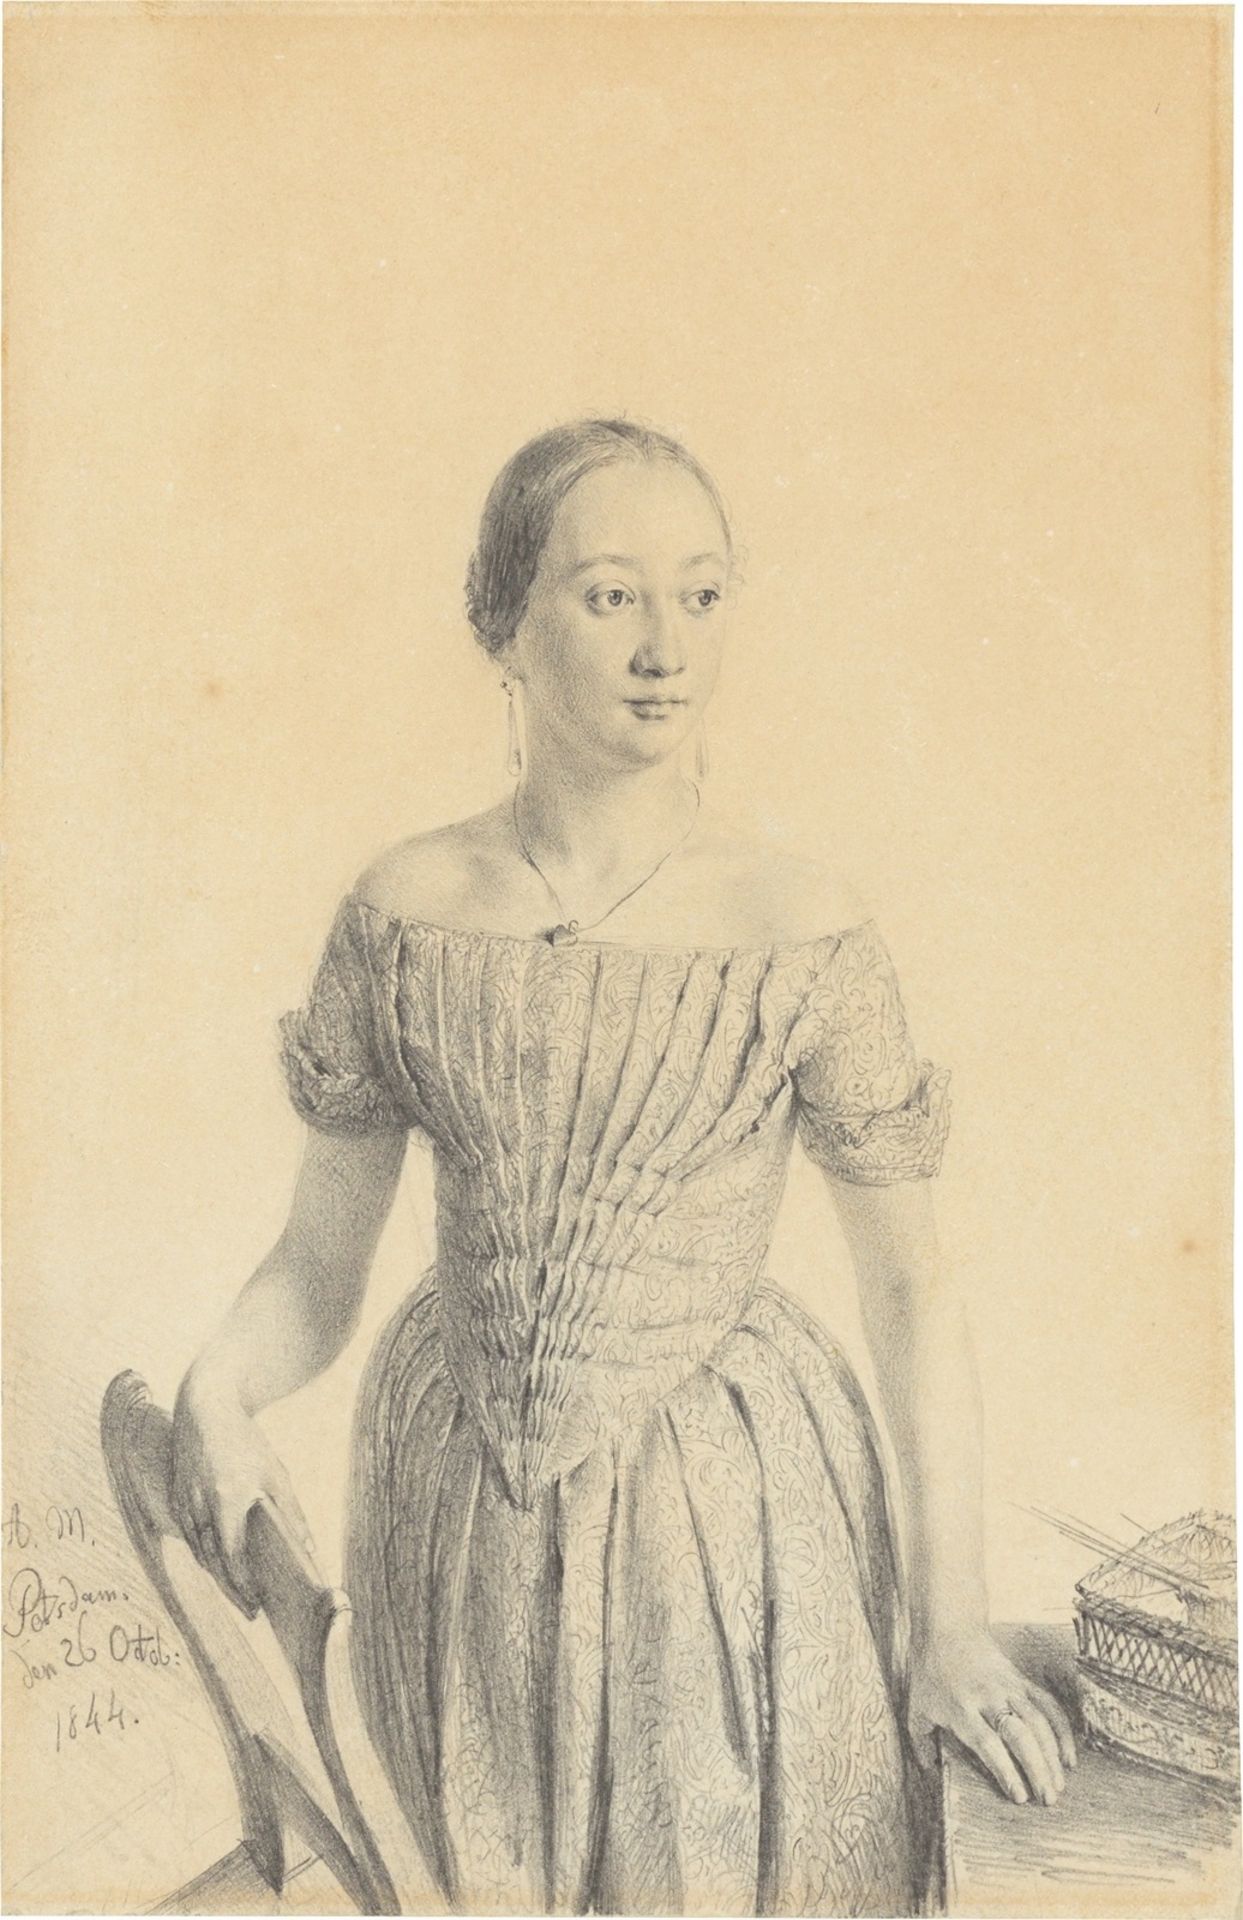 Adolph Menzel. Sophie Puhlmann. 1844